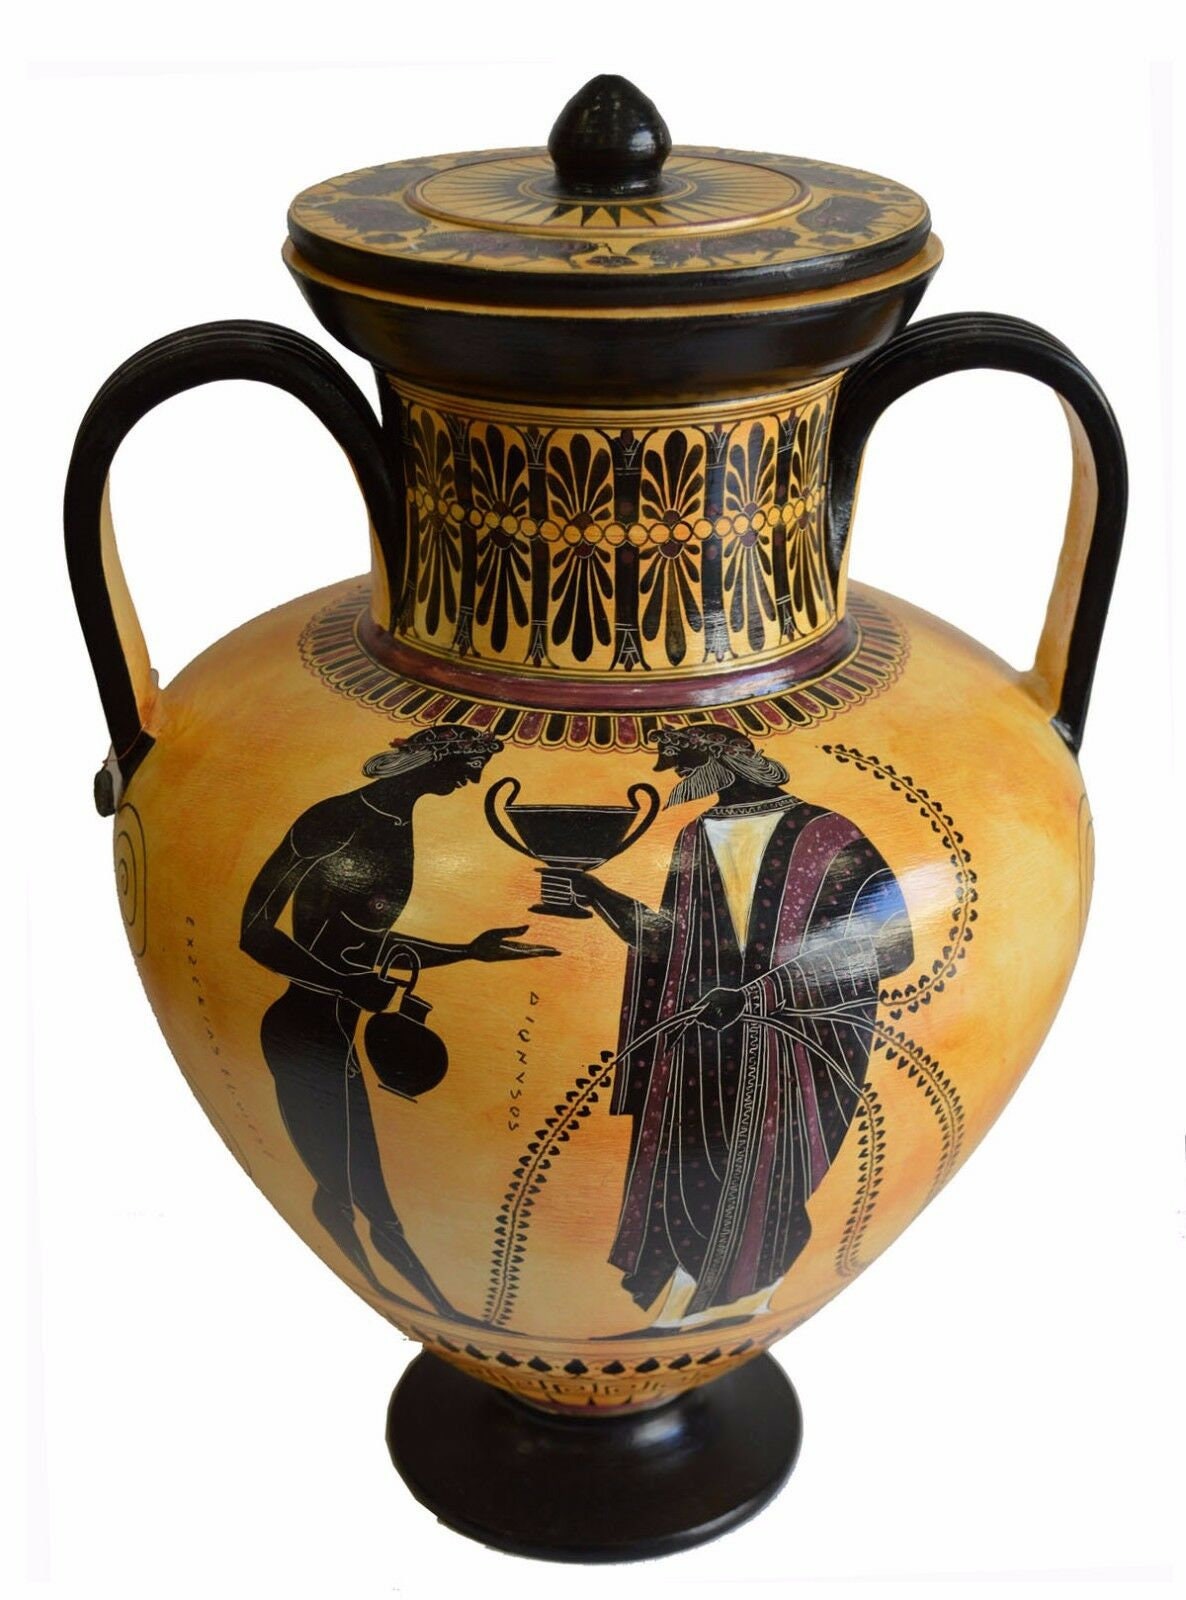 Achilles and Penthesileia, Amazonian Queen - Homer's Iliad - Dionysos, God of Wine - Amphora Vase - Exekias British Museum